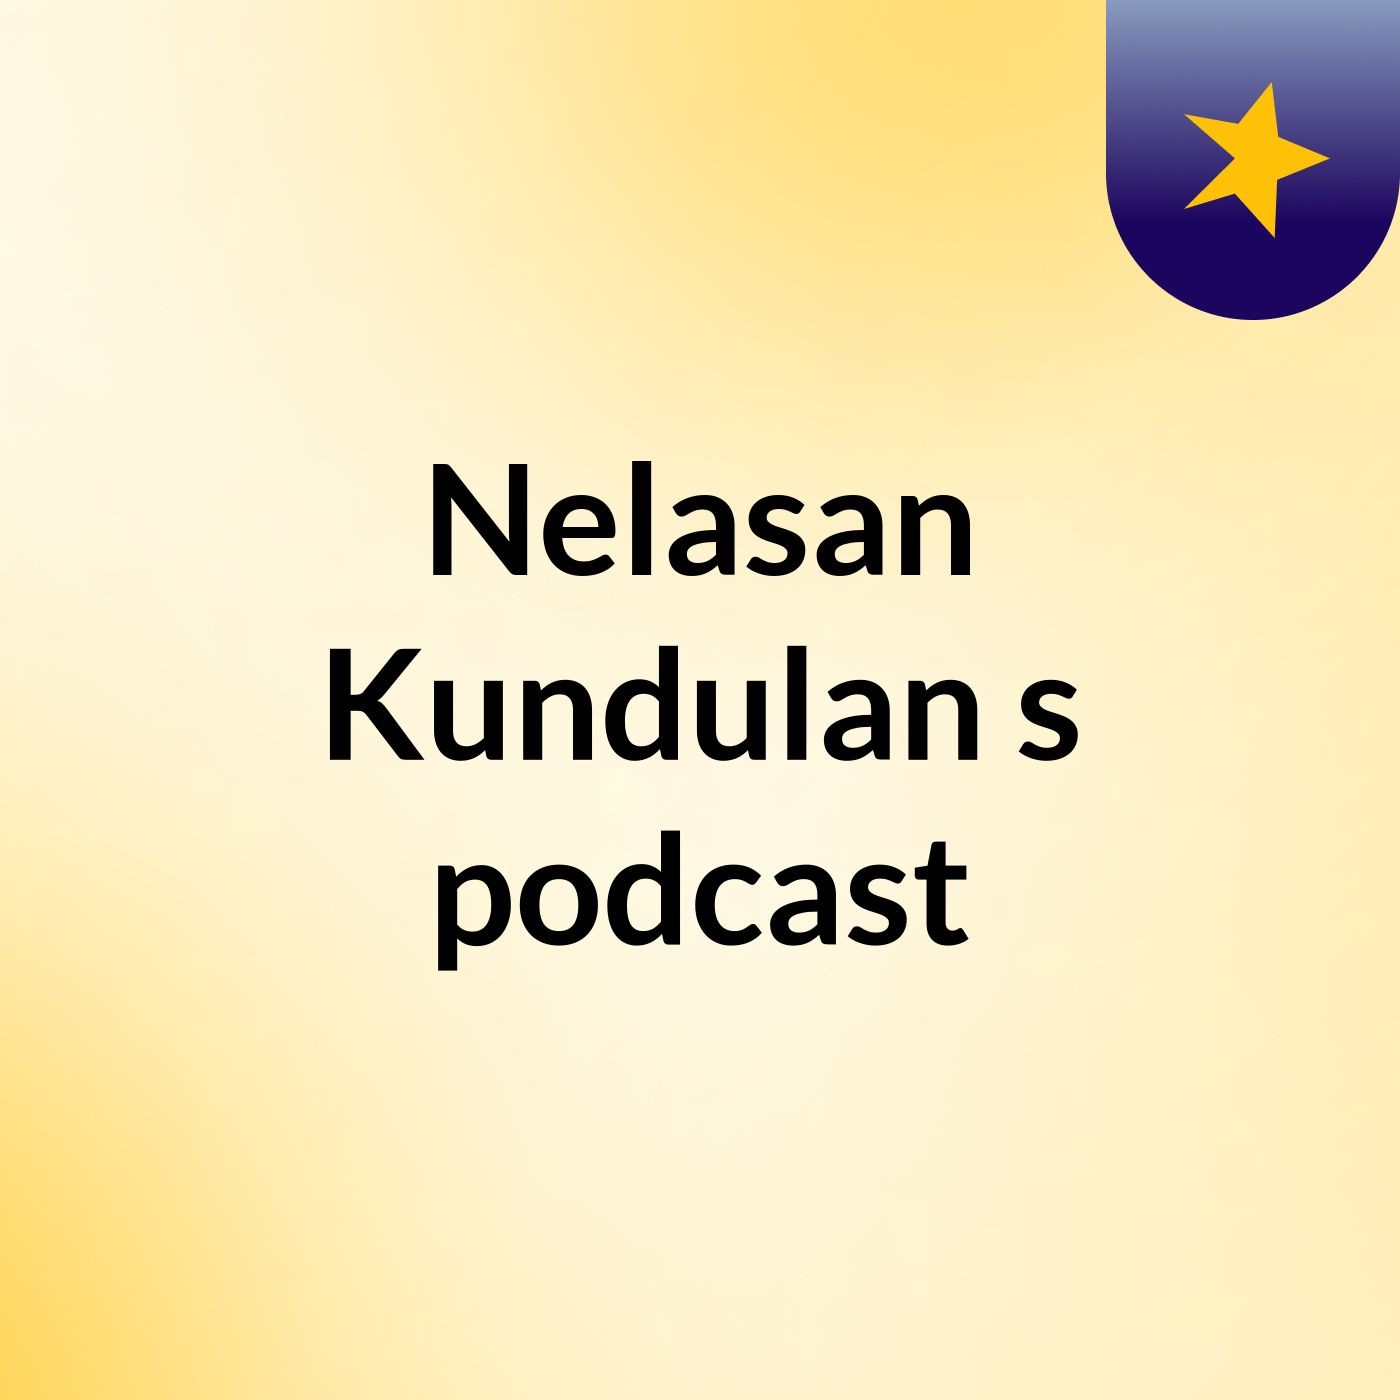 Episode 3 - Nelasan Kundulan's podcast